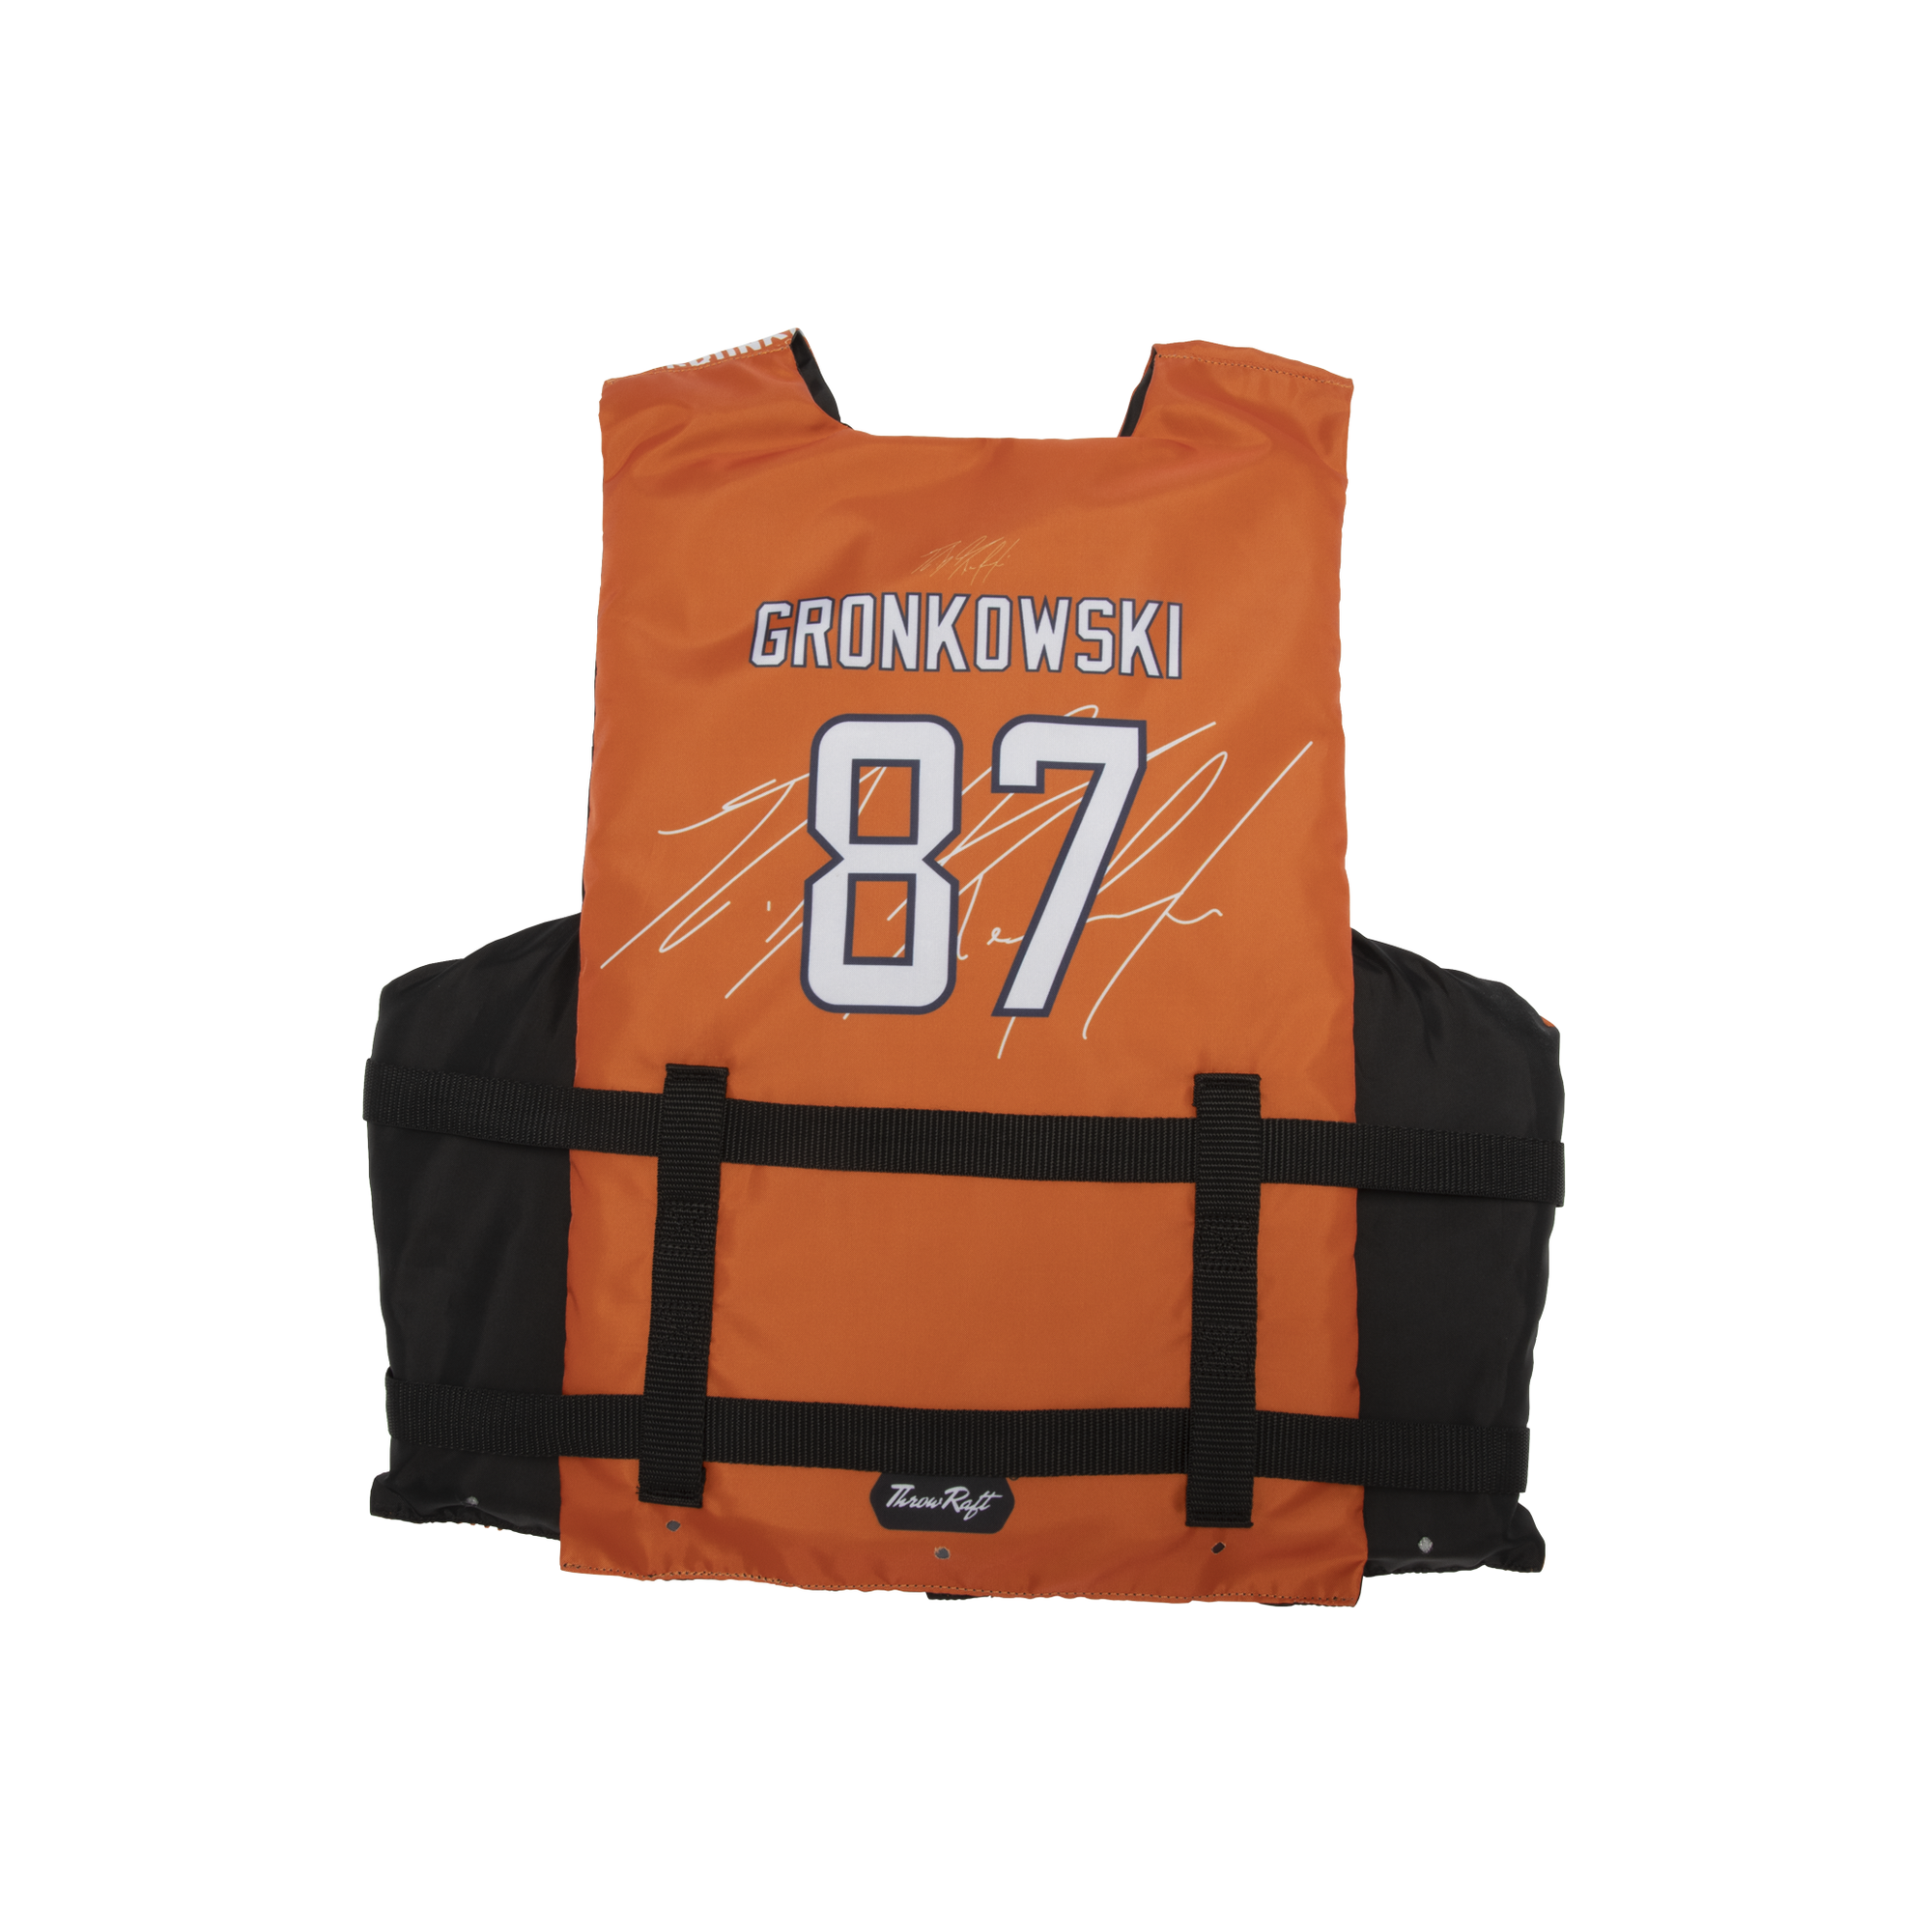 Rob Gronkowski Signature NFL Adult Life Jacket